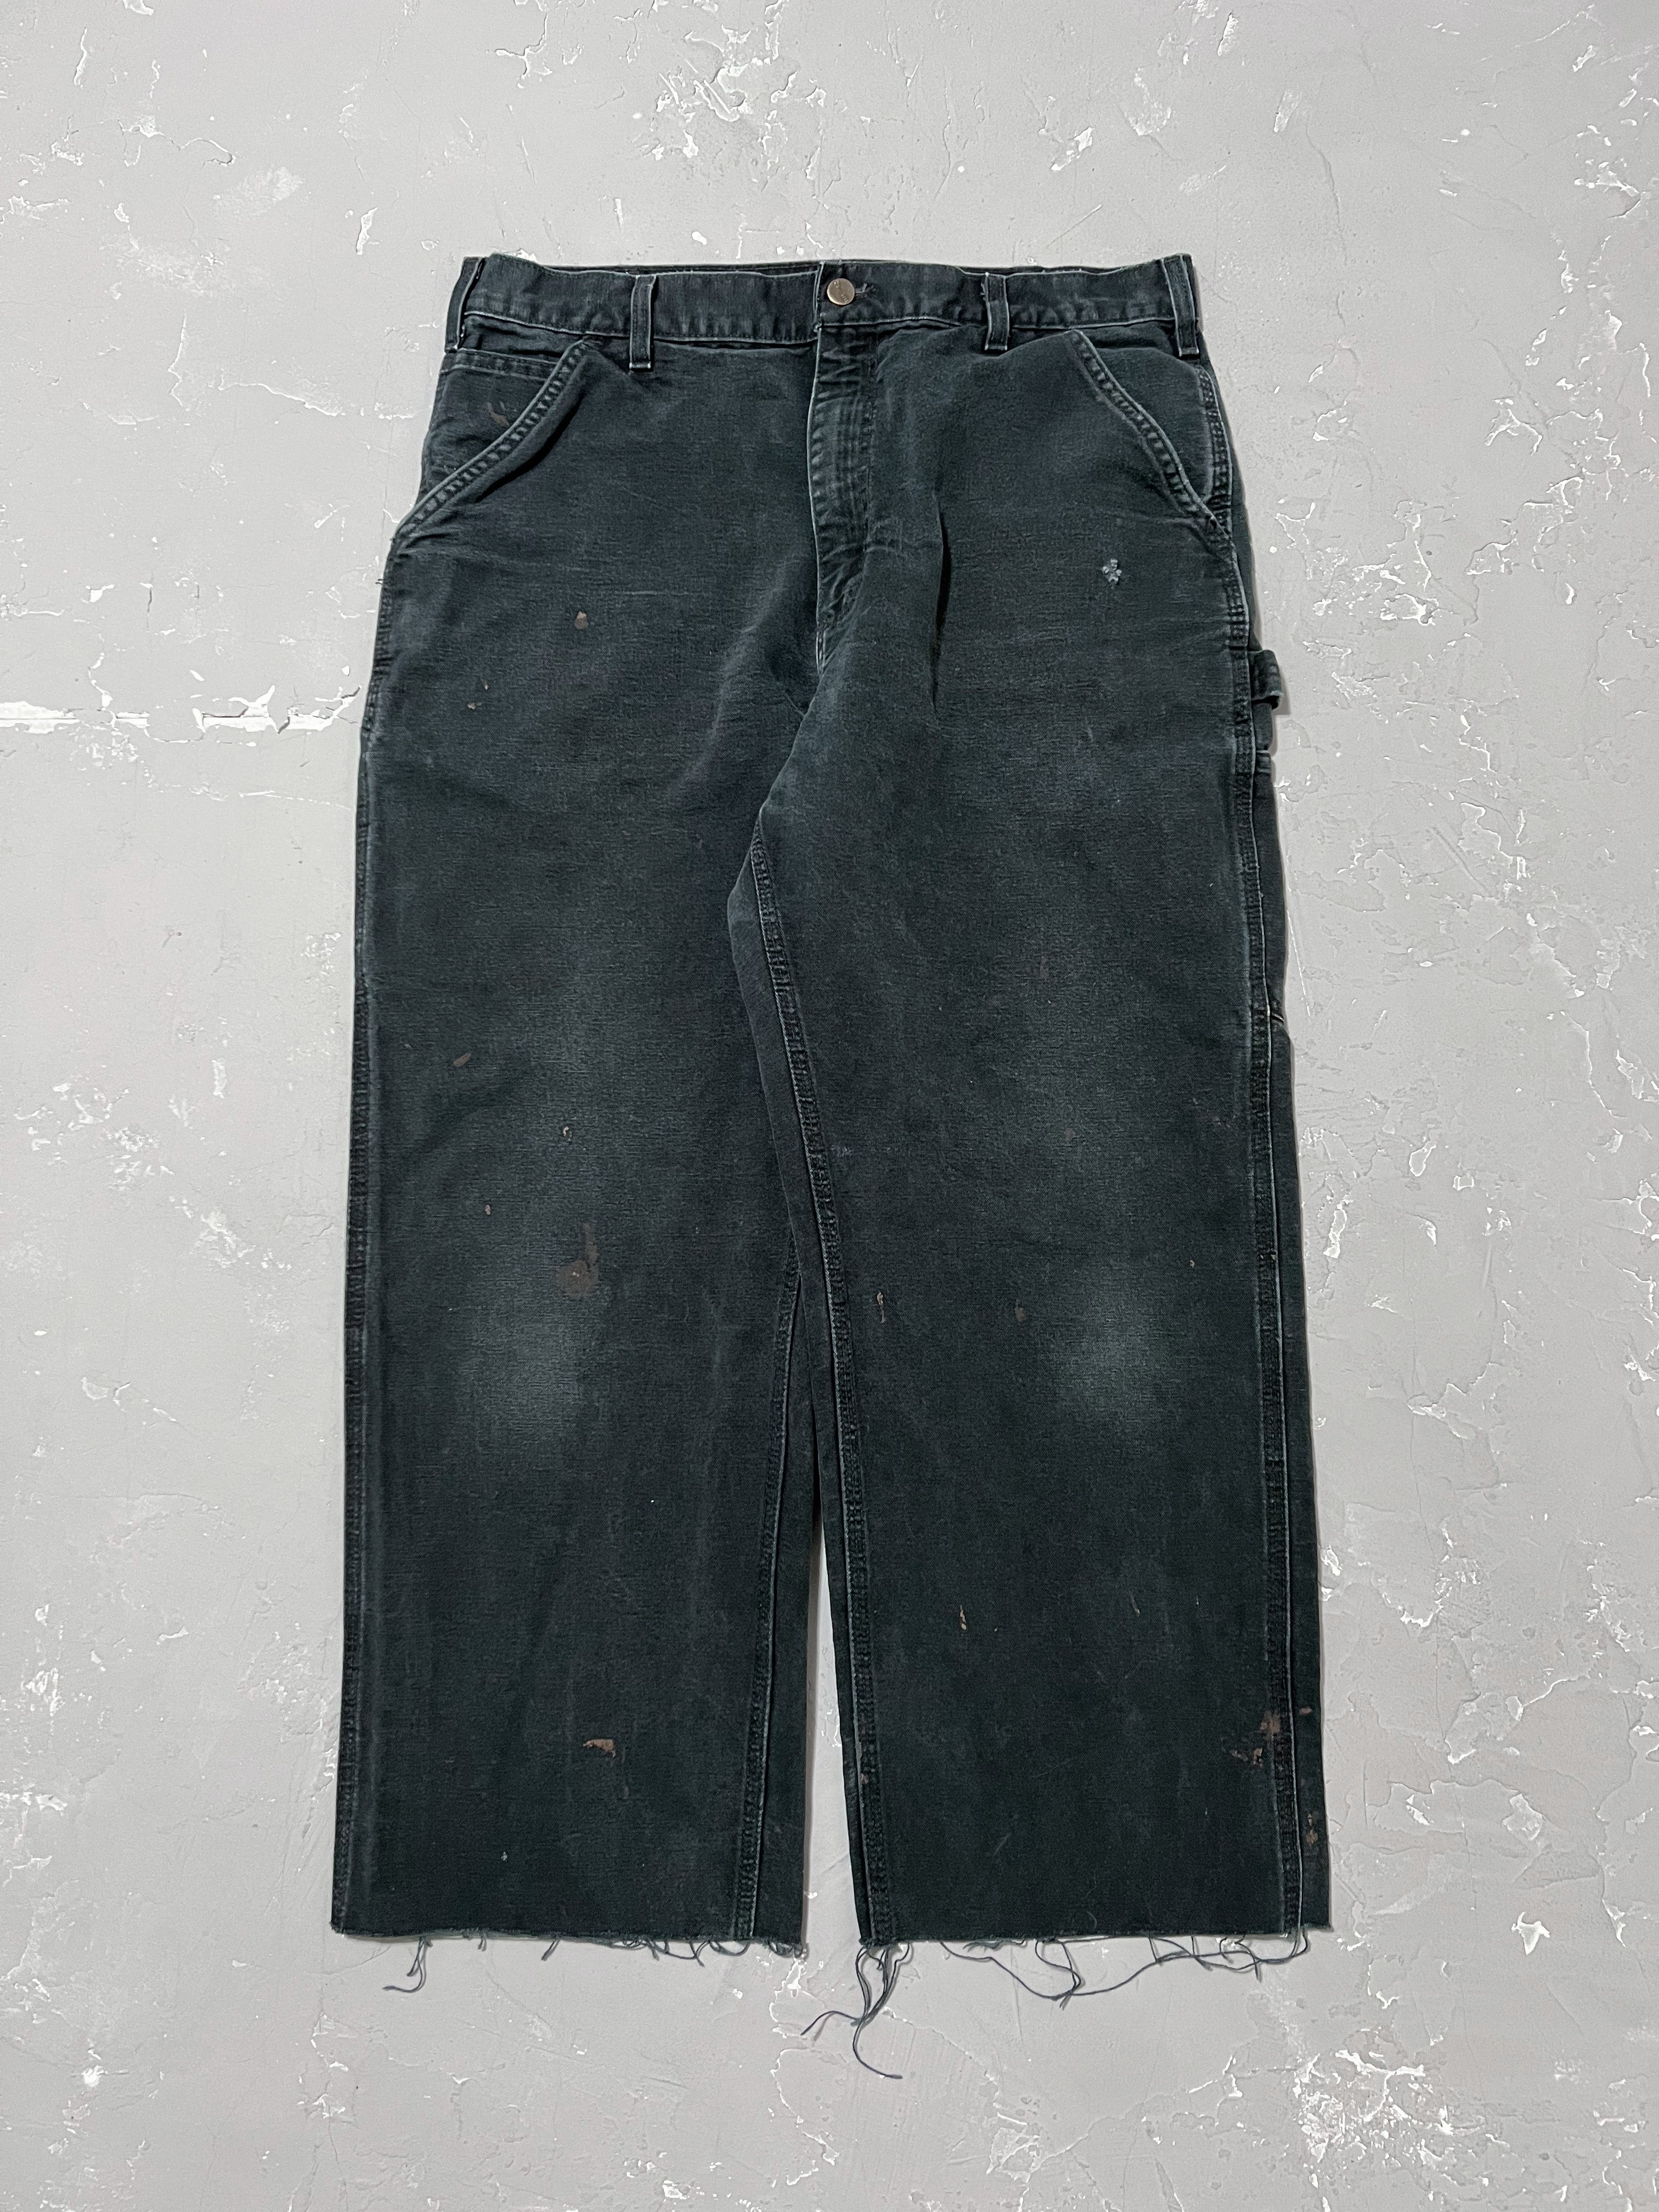 Carhartt Faded Black Carpenter Pants [36 x 30]